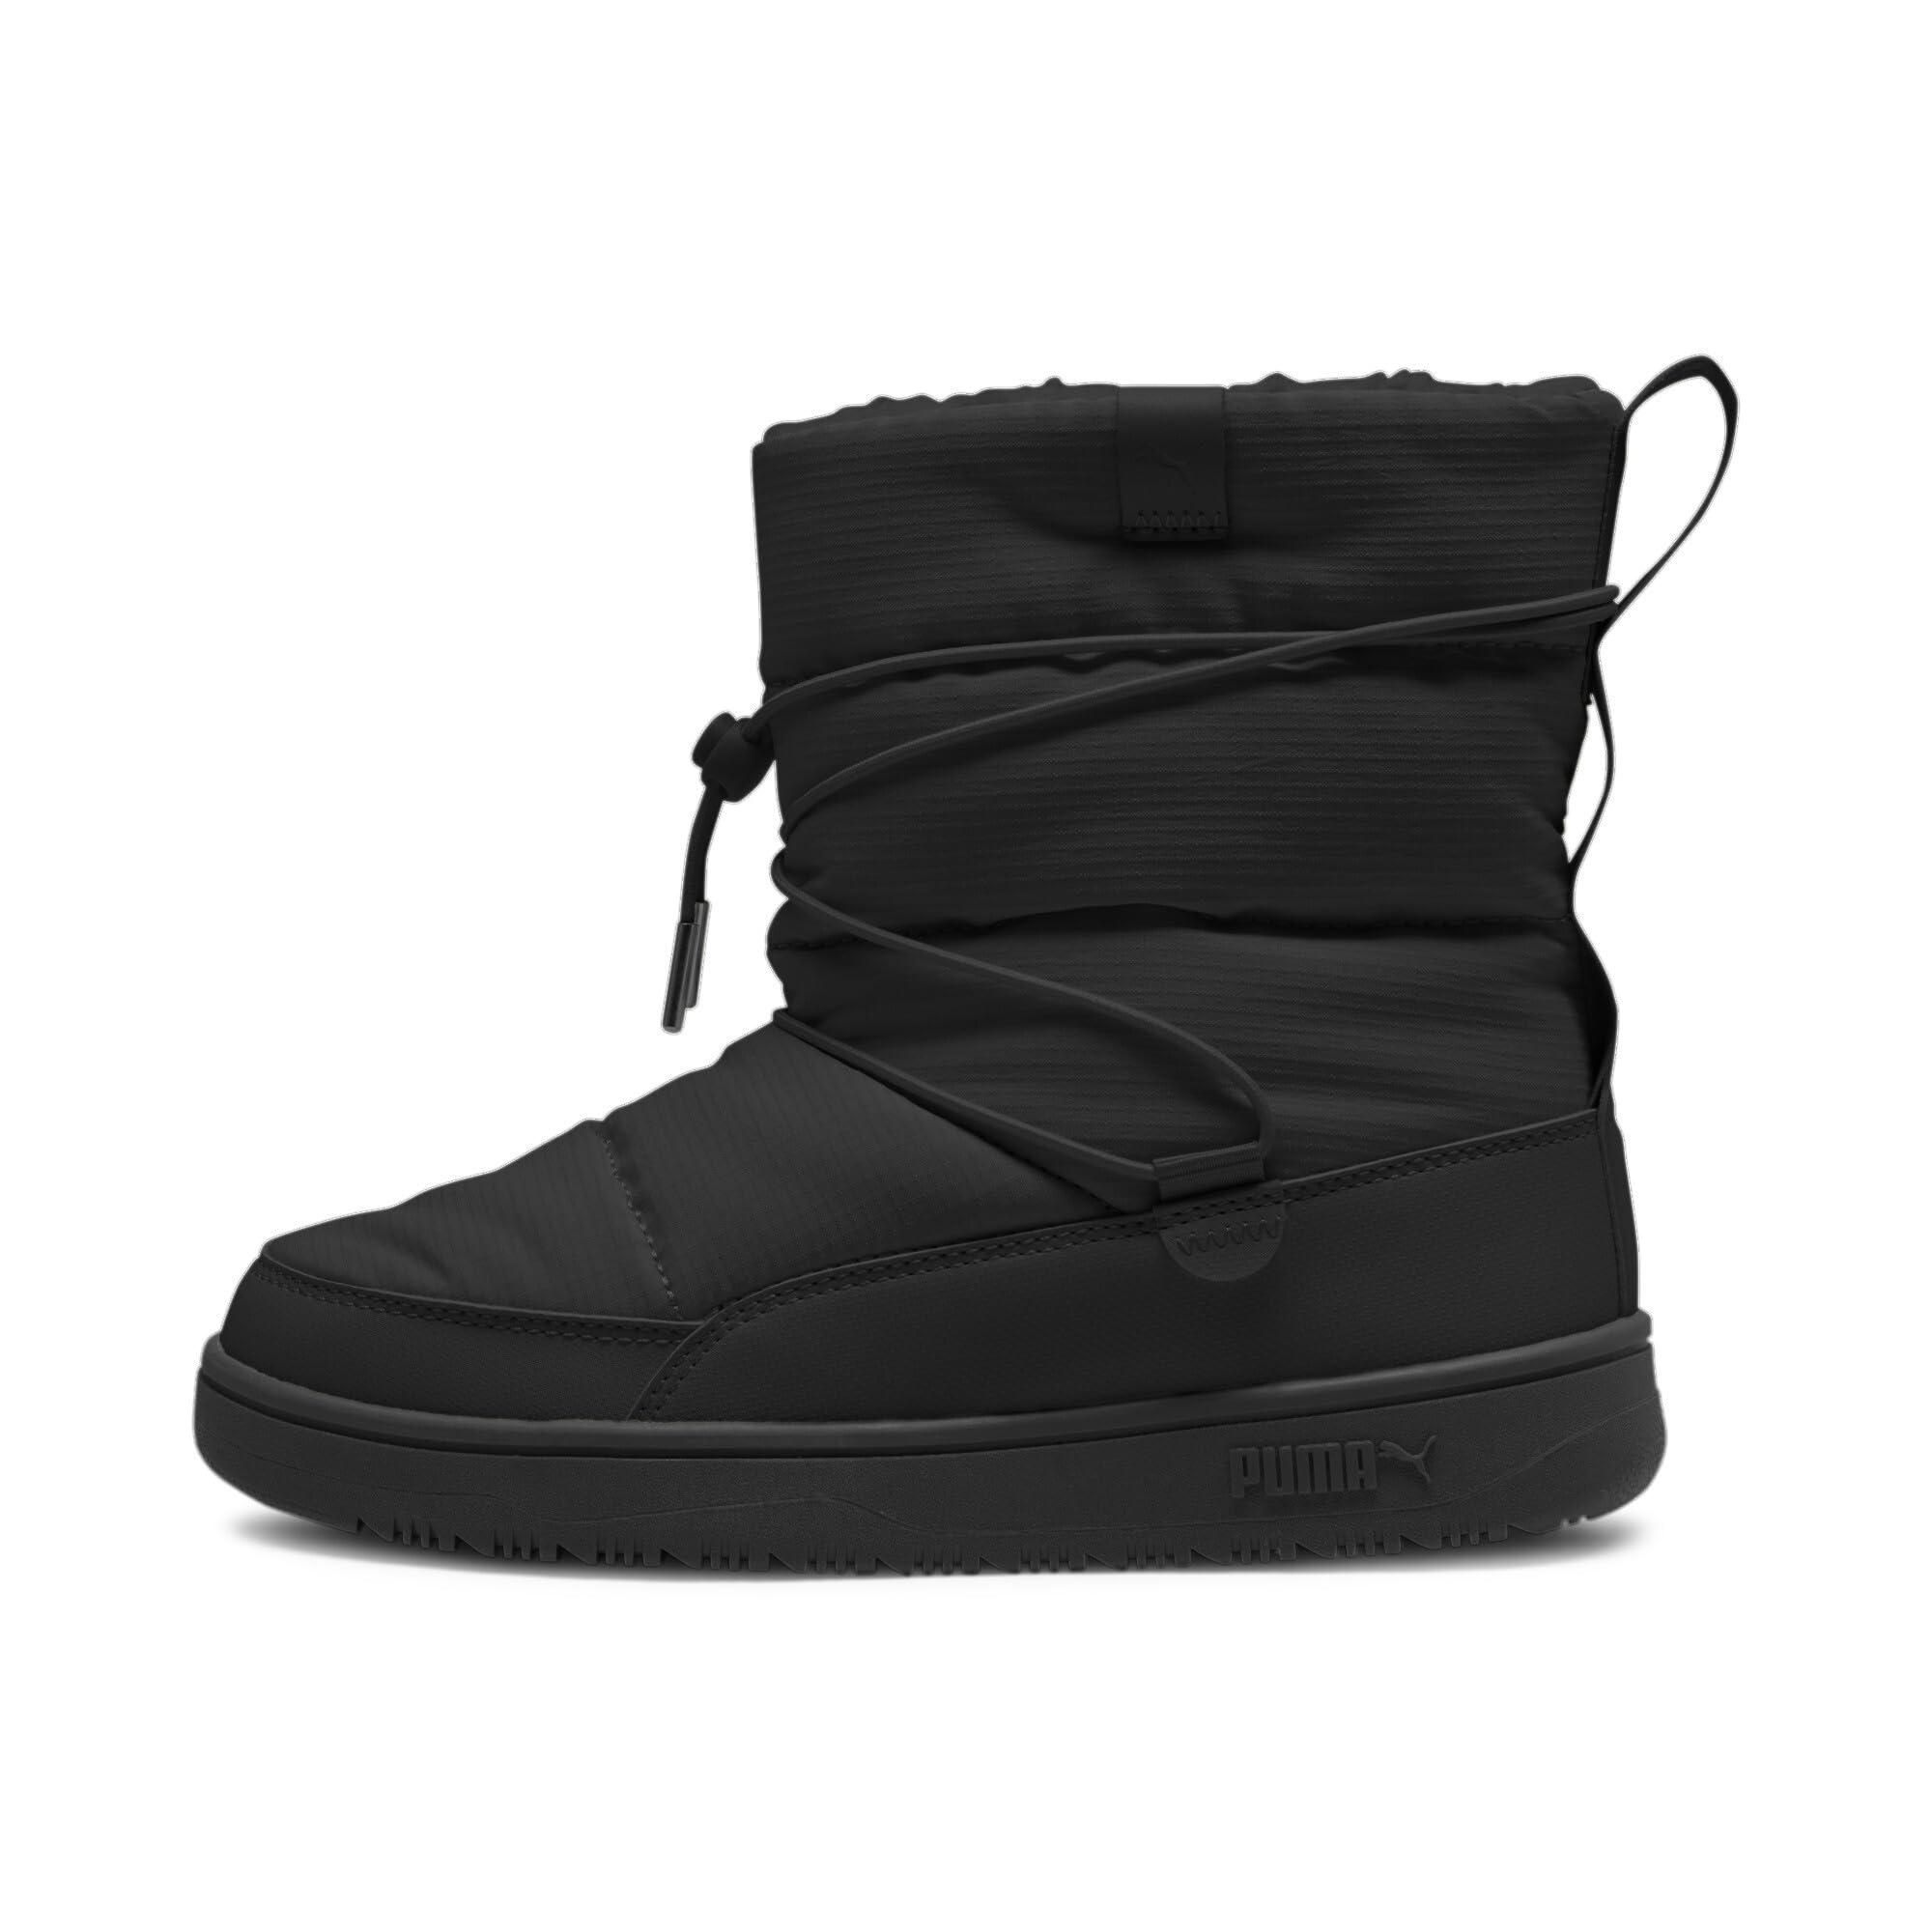 PUMA | Lyst in Snowbae Boots Black